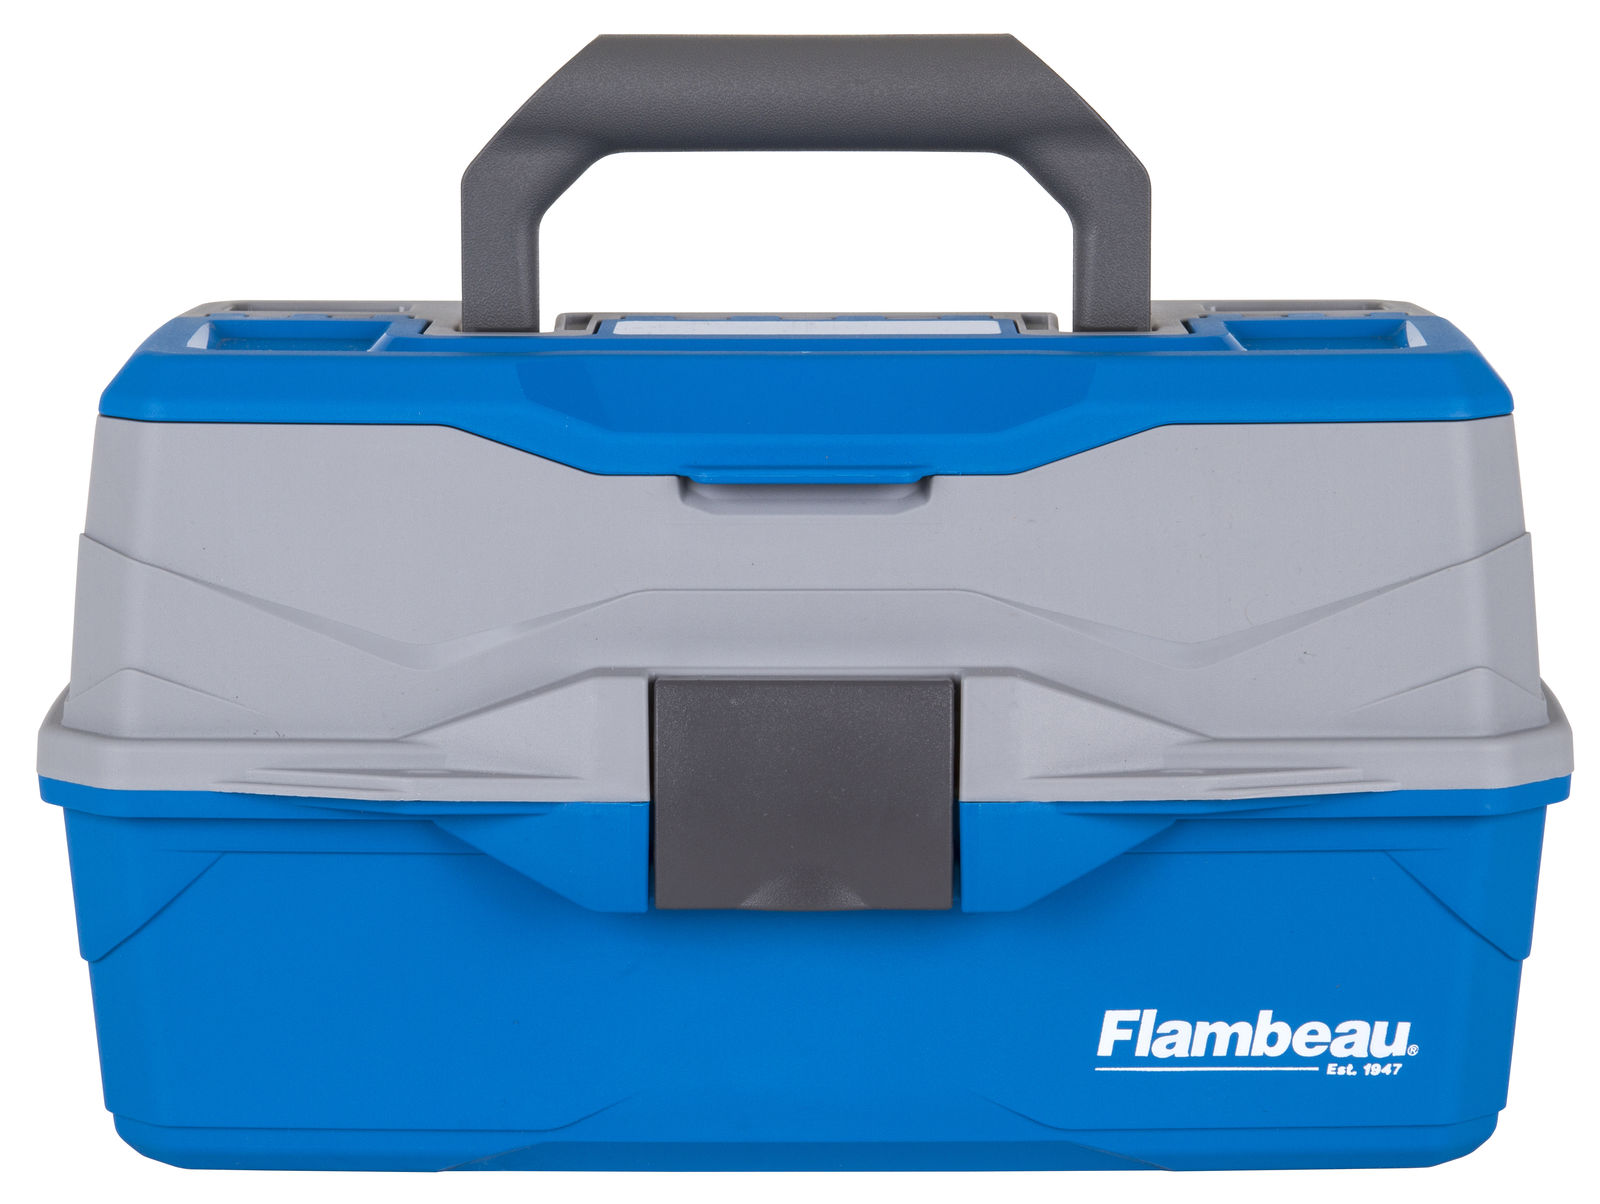 Flambeau Classic Caja de Pesca - Classic 2-Tray Blue